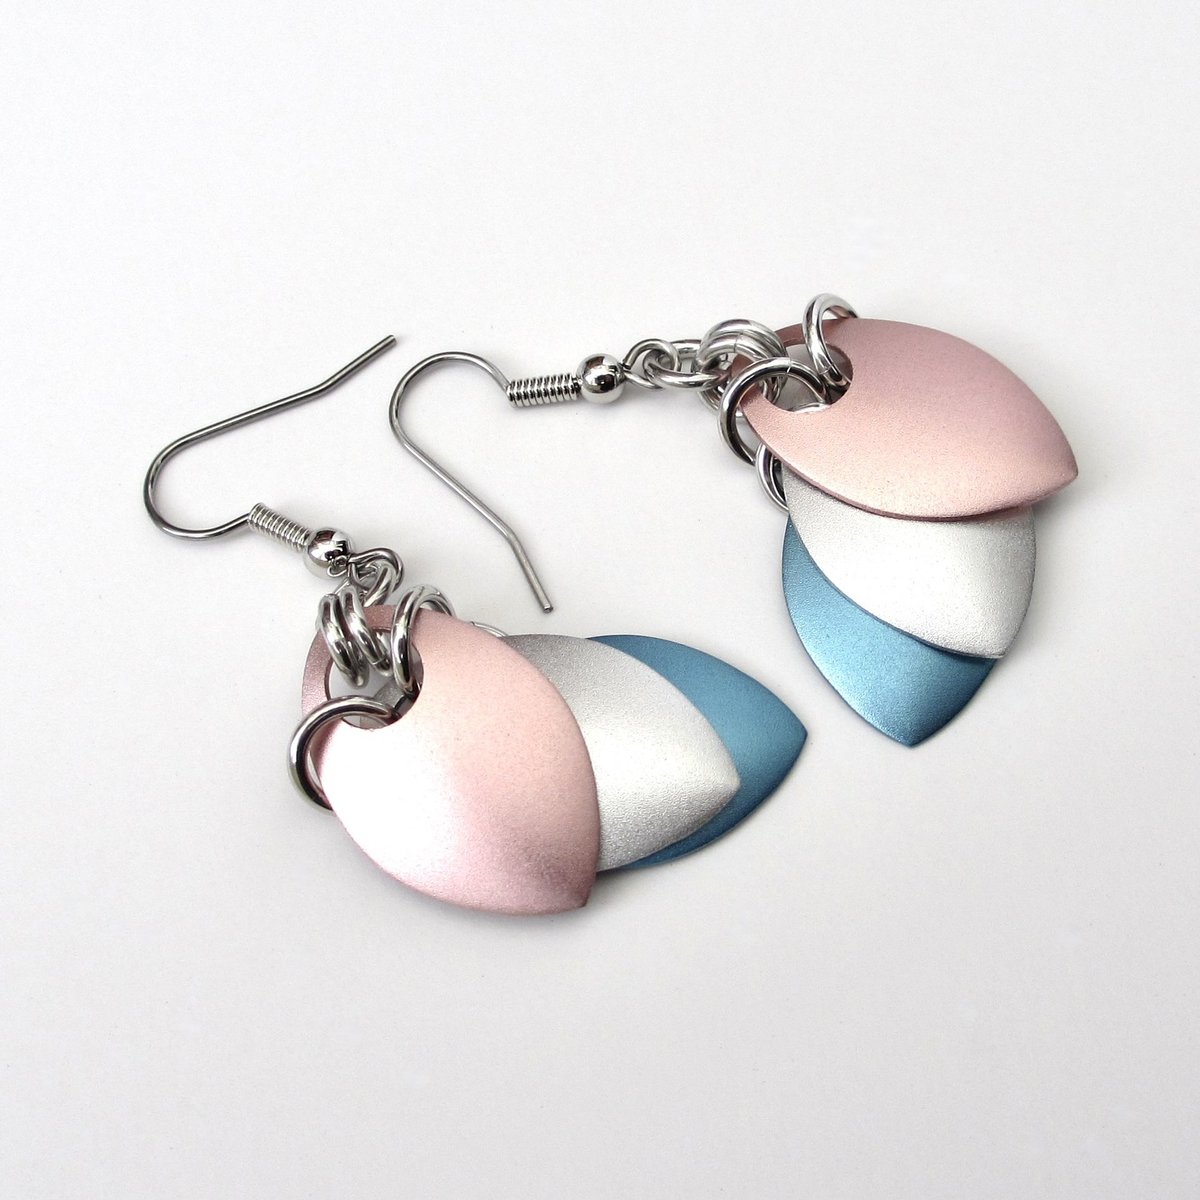 Transgender pride earrings, trans pride jewelry, chainmail scales earrings; pink white blue